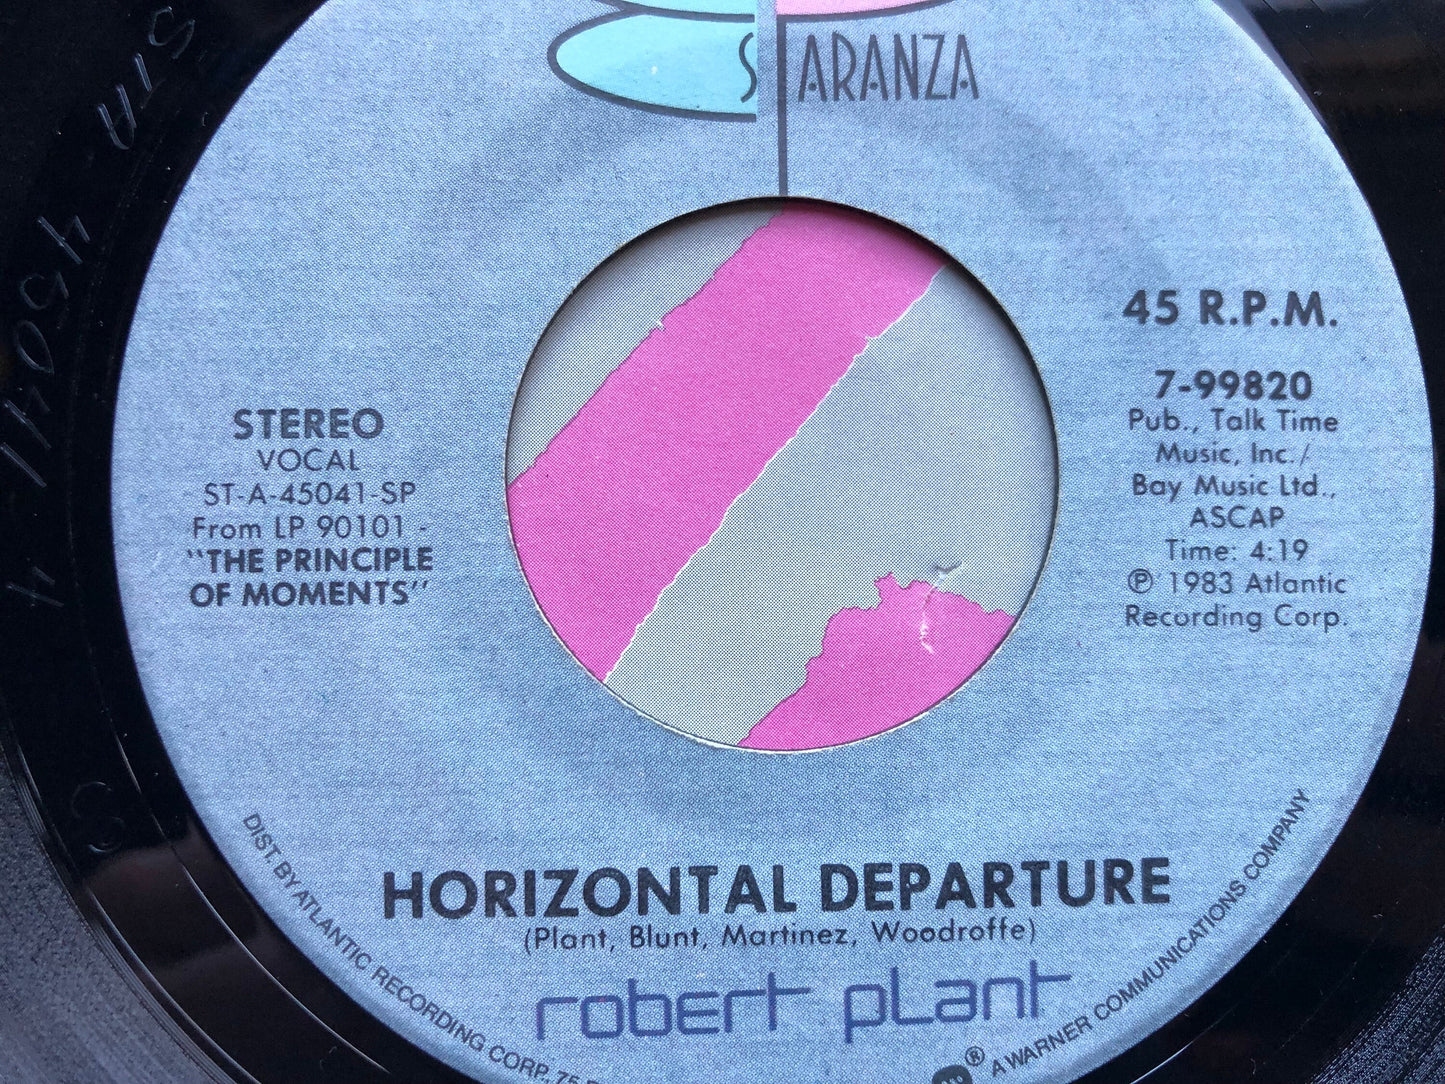 Robert Plant • In the Mood • Horizontal Departure  • 7-99820 • Robert Plant Singles • 45rpm • Classic Rock Singles